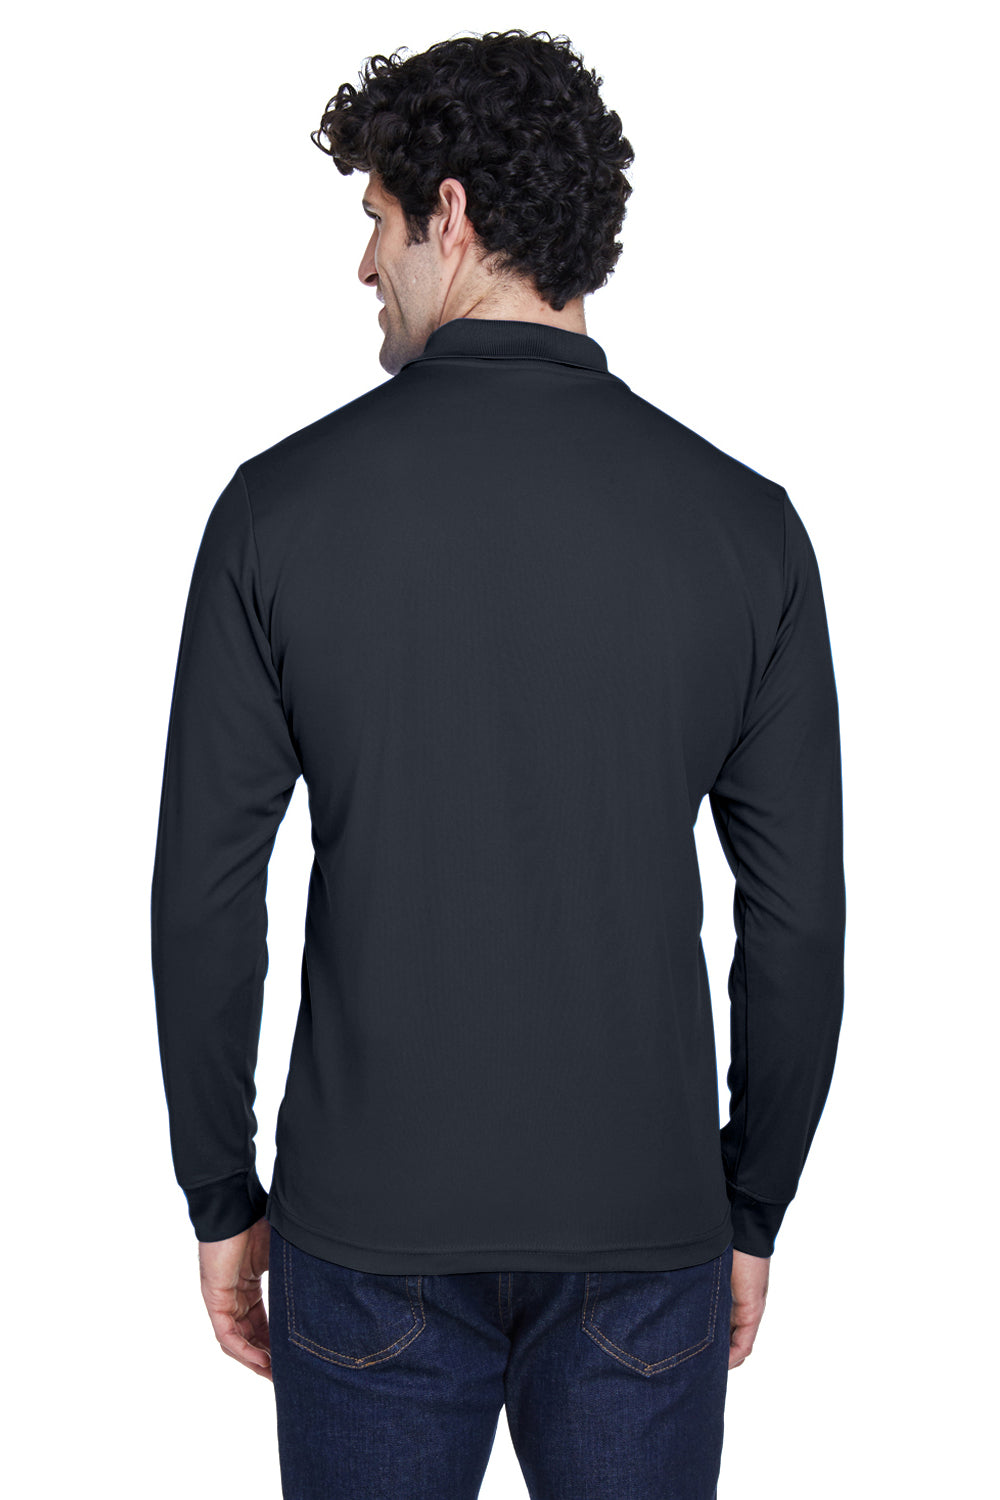 Core 365 88192 Mens Pinnacle Performance Moisture Wicking Long Sleeve Polo Shirt Carbon Grey Back